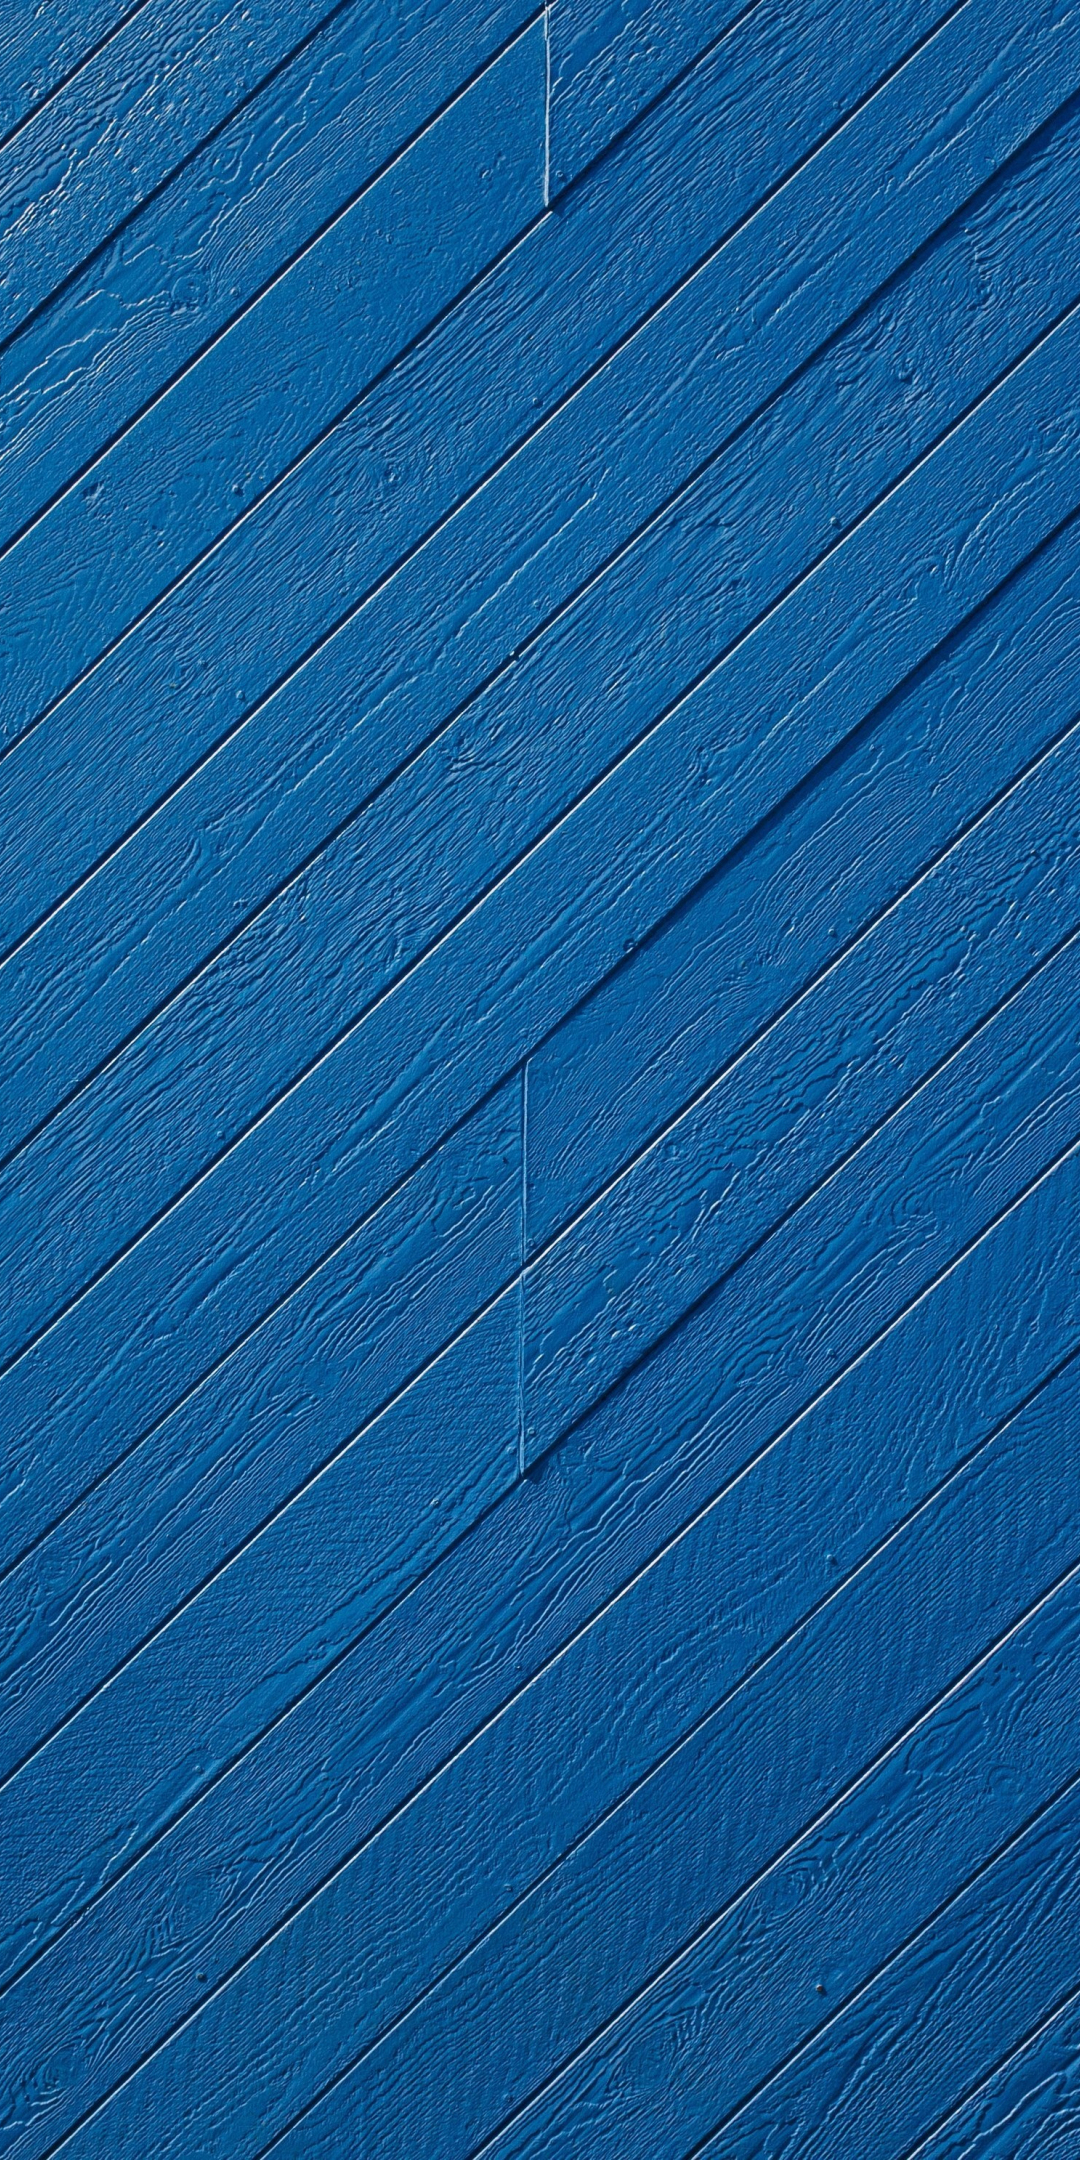 Wooden, blue surface, stripes, 1080x2160 wallpaper